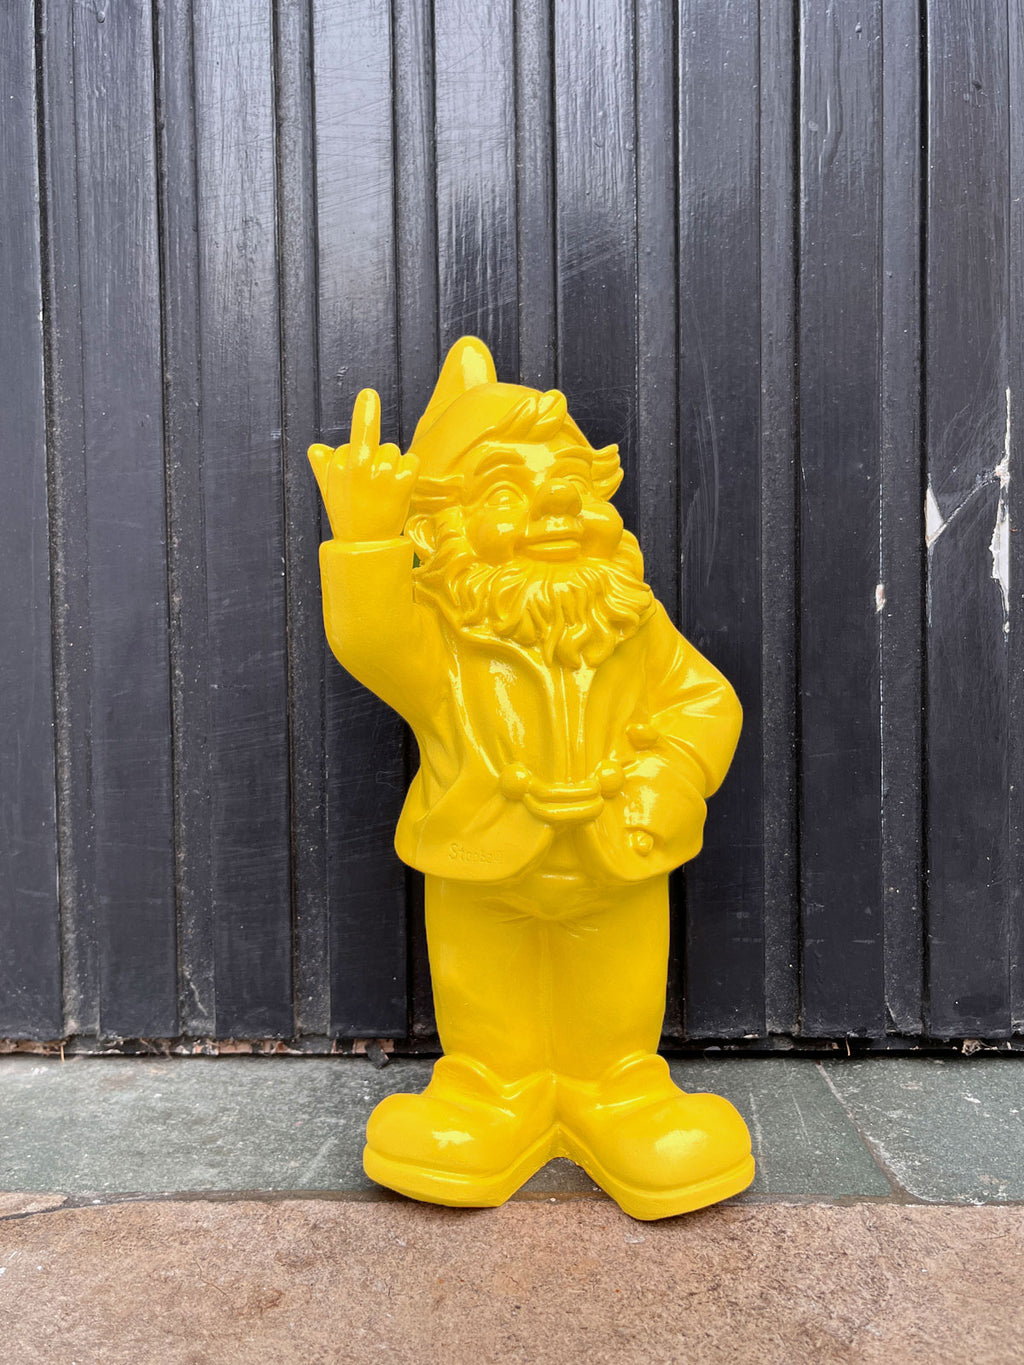 Naughty Finger Gnome - Yellow